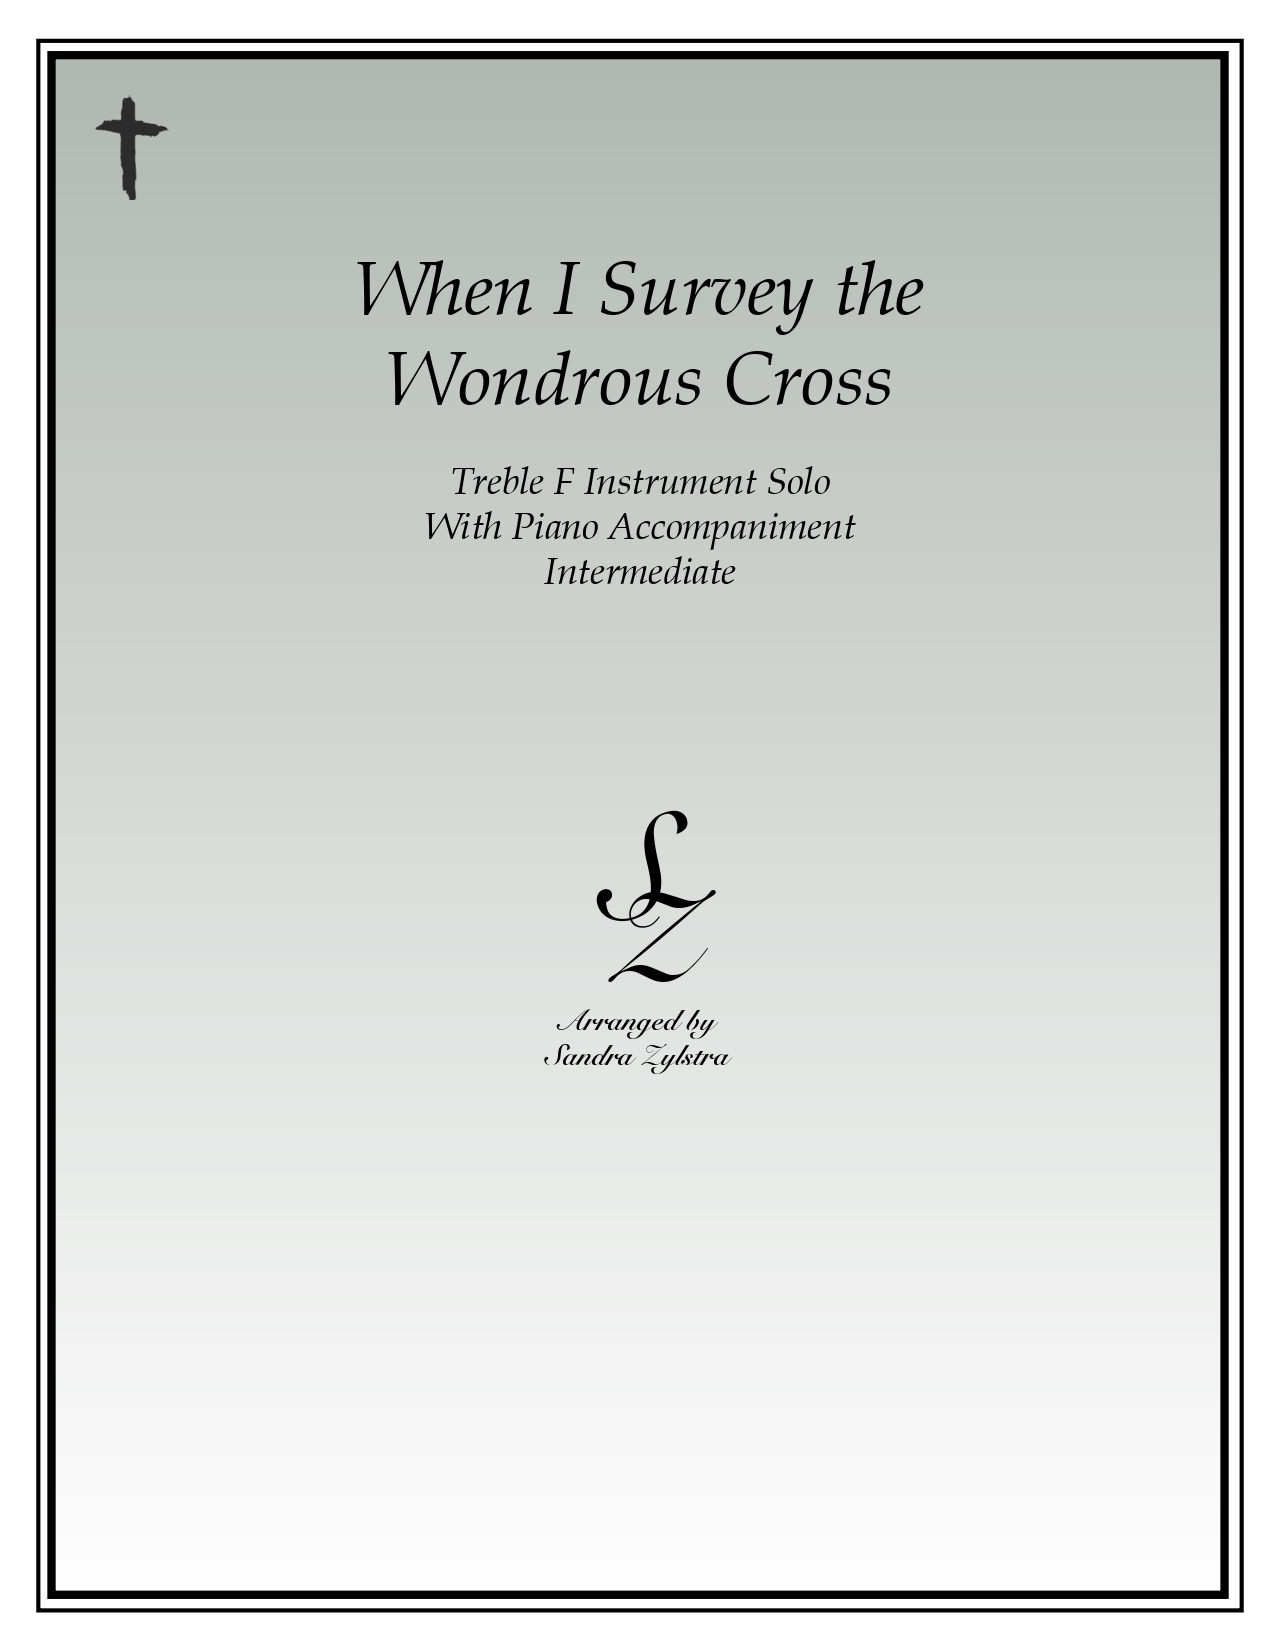 When I Survey The Wondrous Cross F instrument solo part cover page 00011